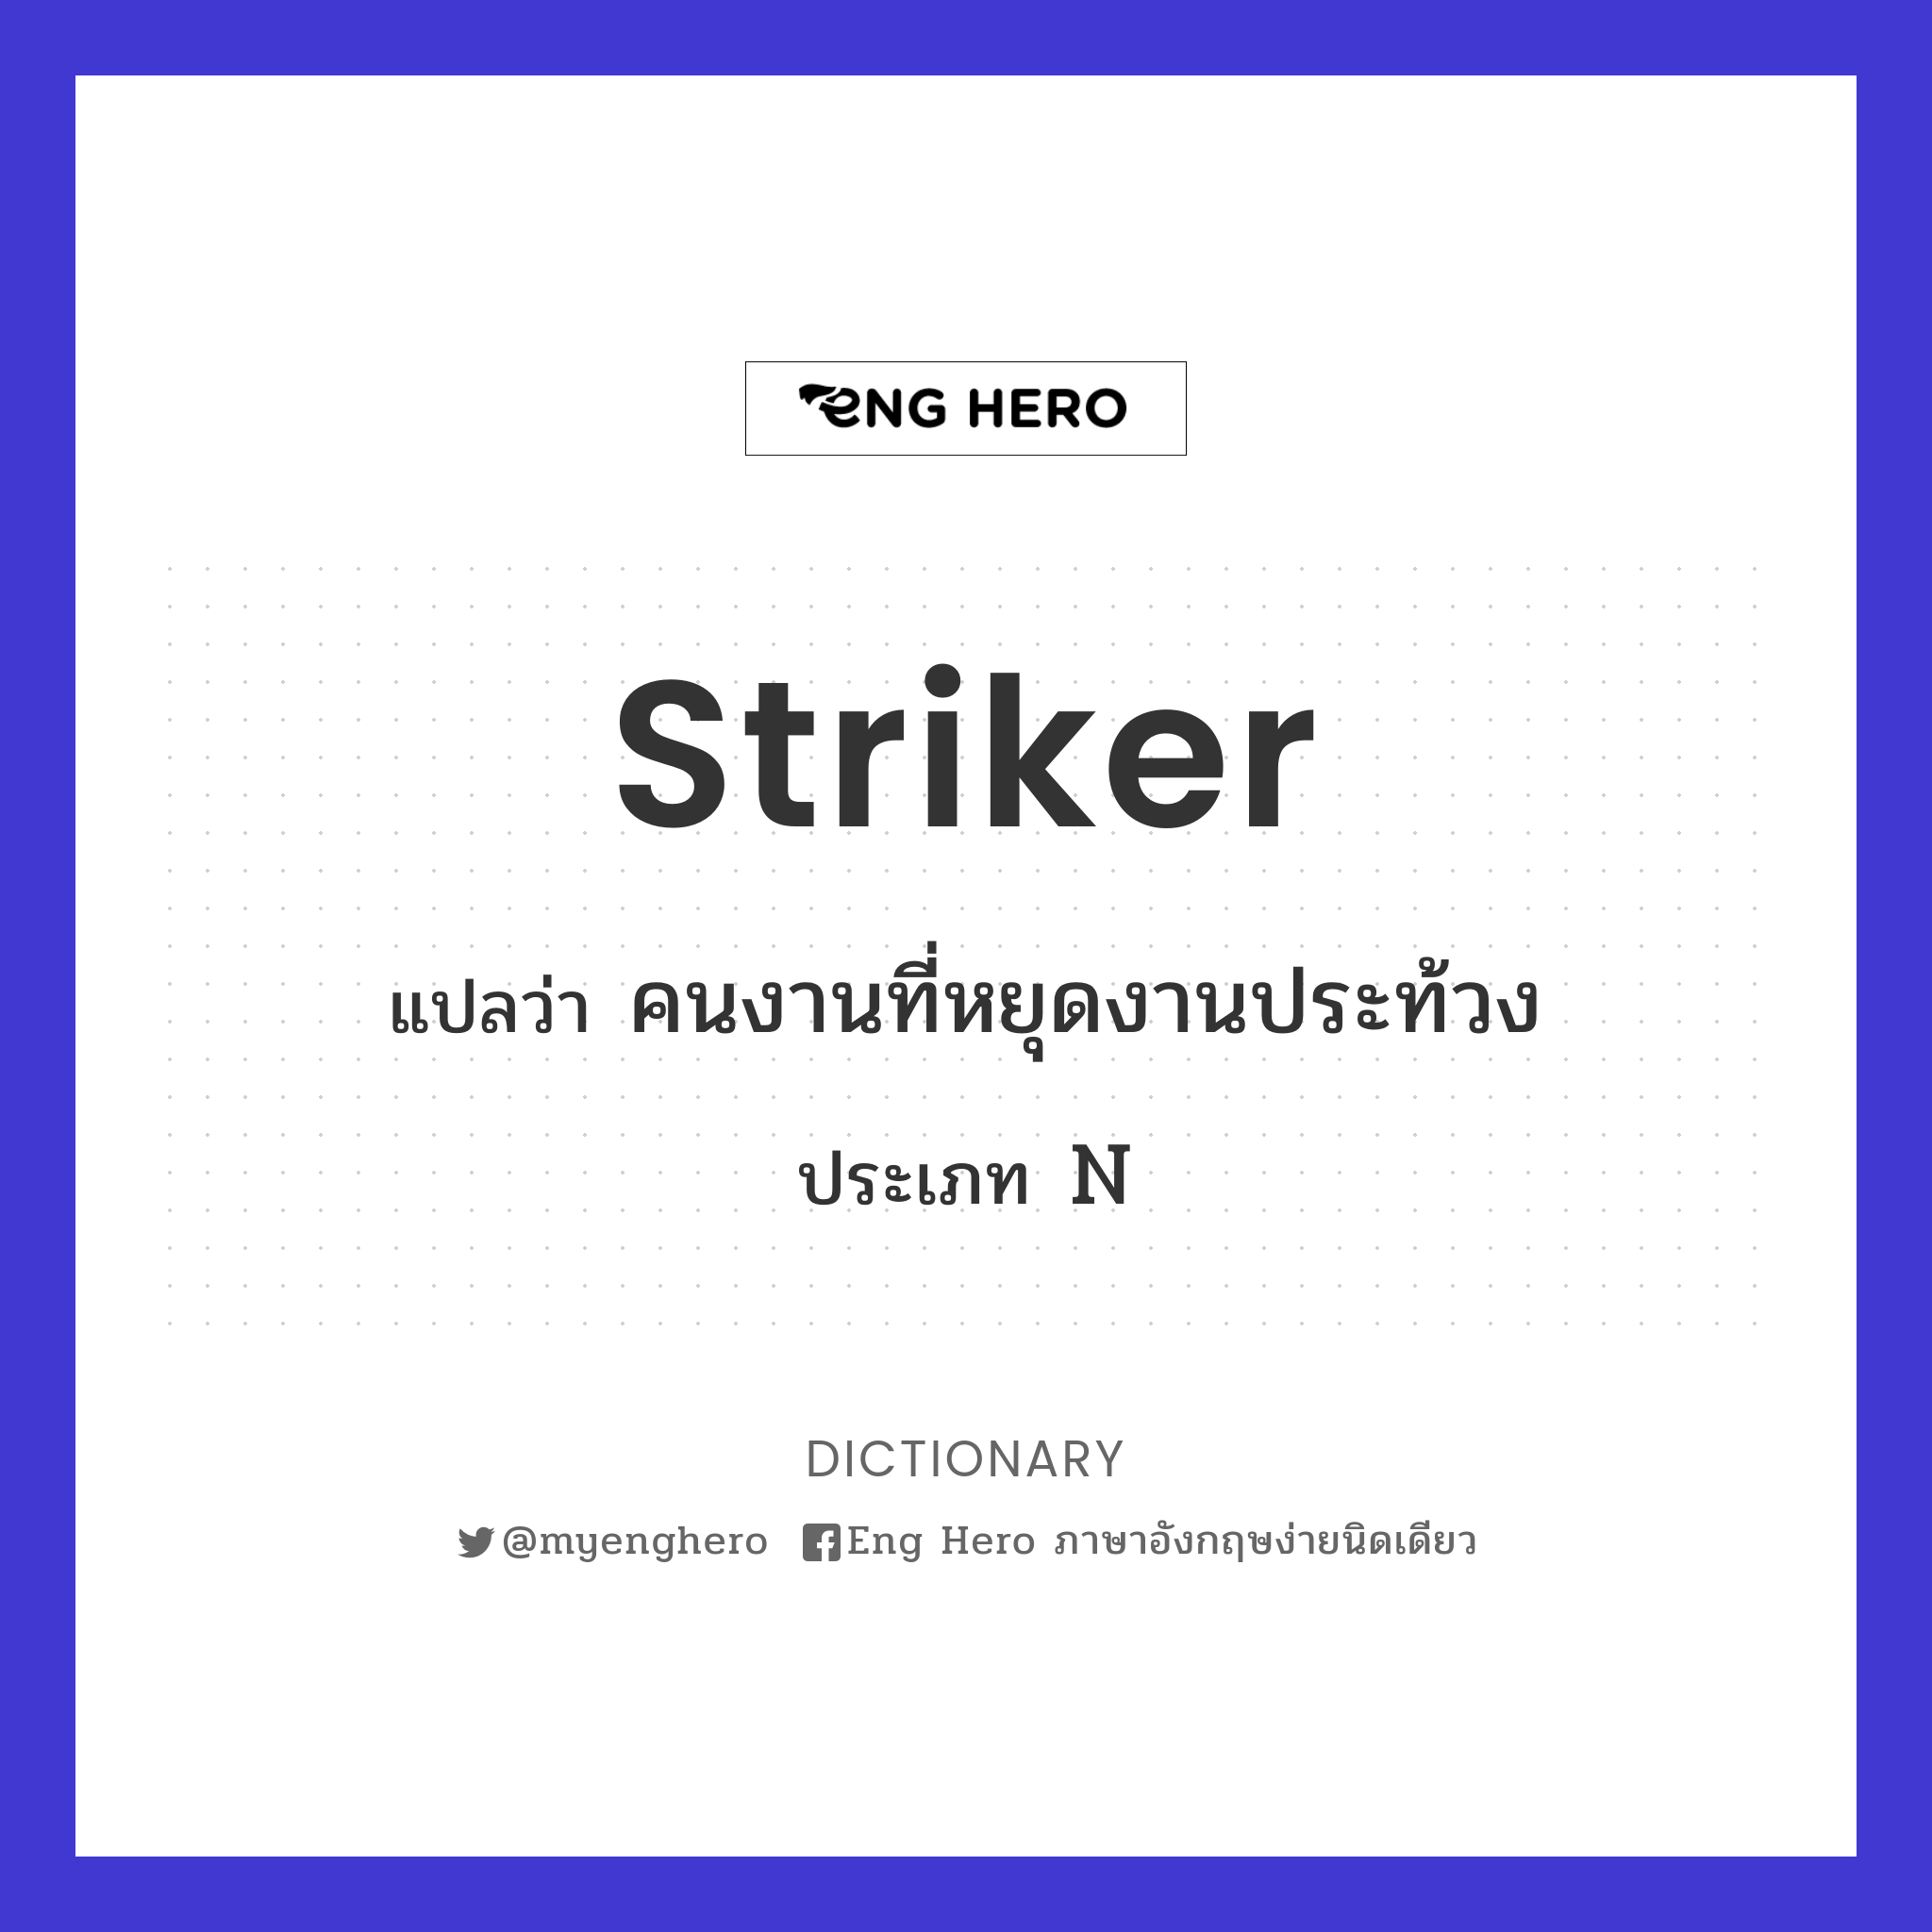 striker